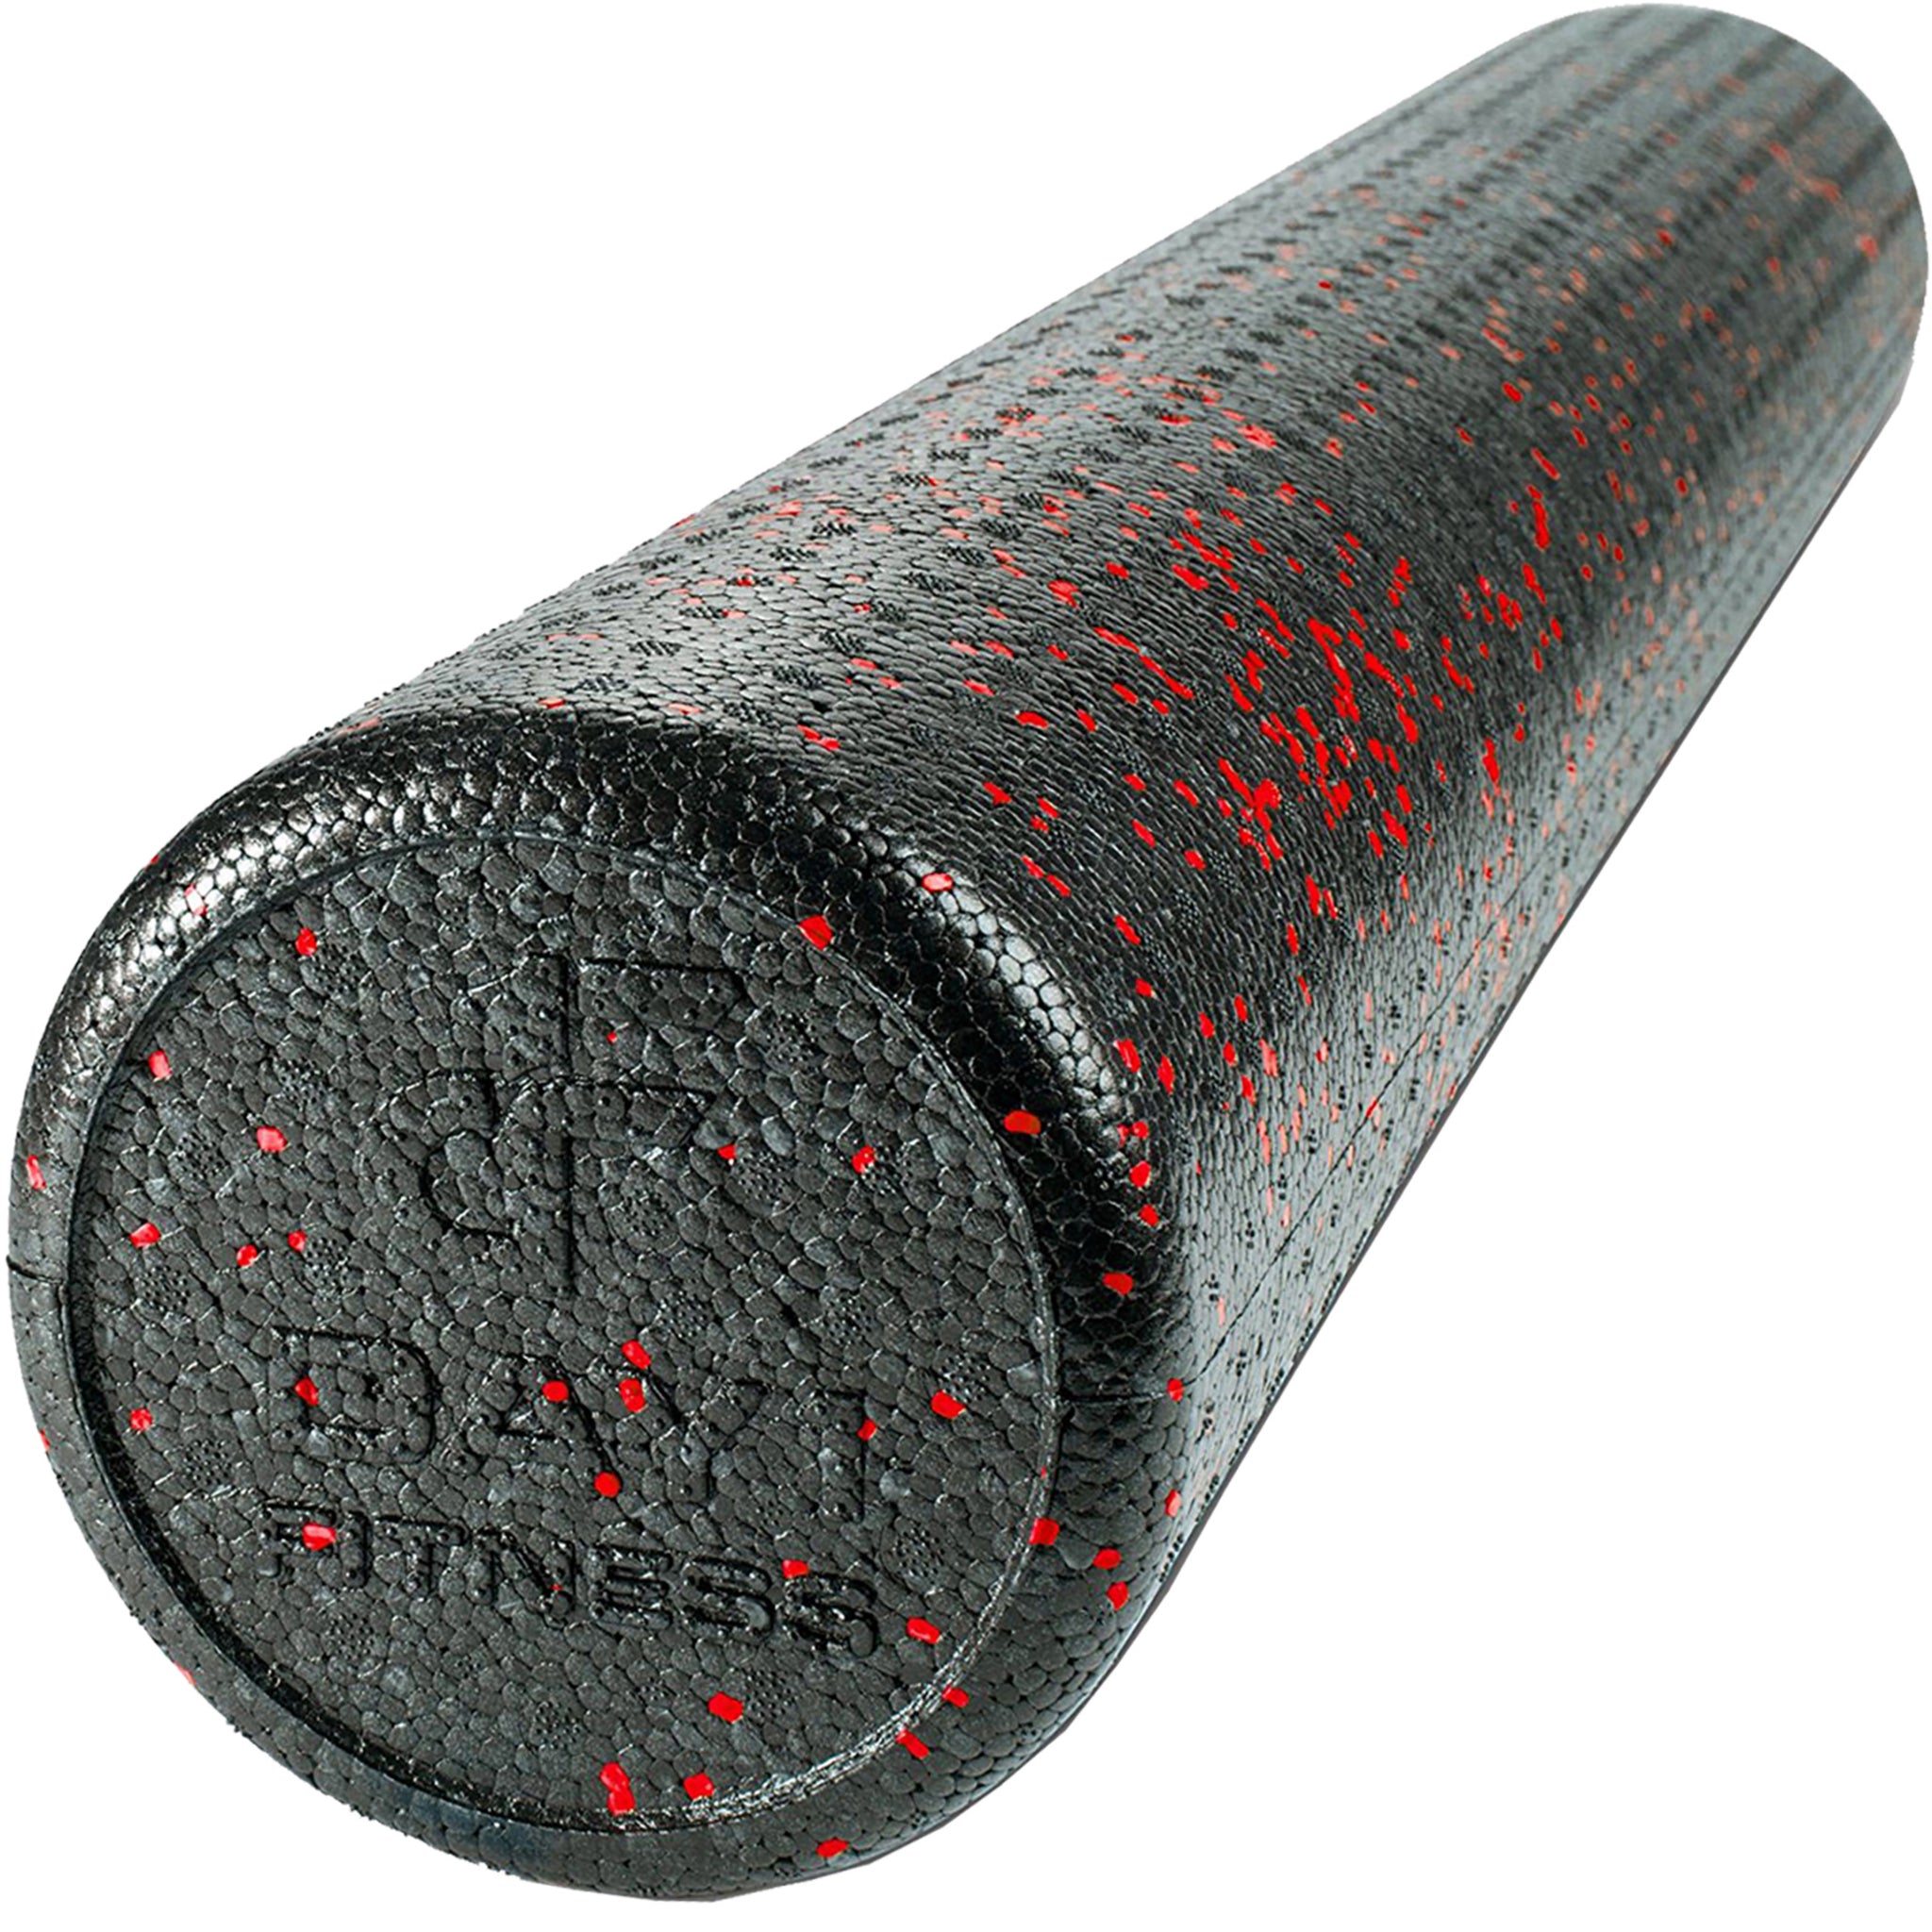 High-Density Foam Roller 36" Speckled Red Day 1 Fitness